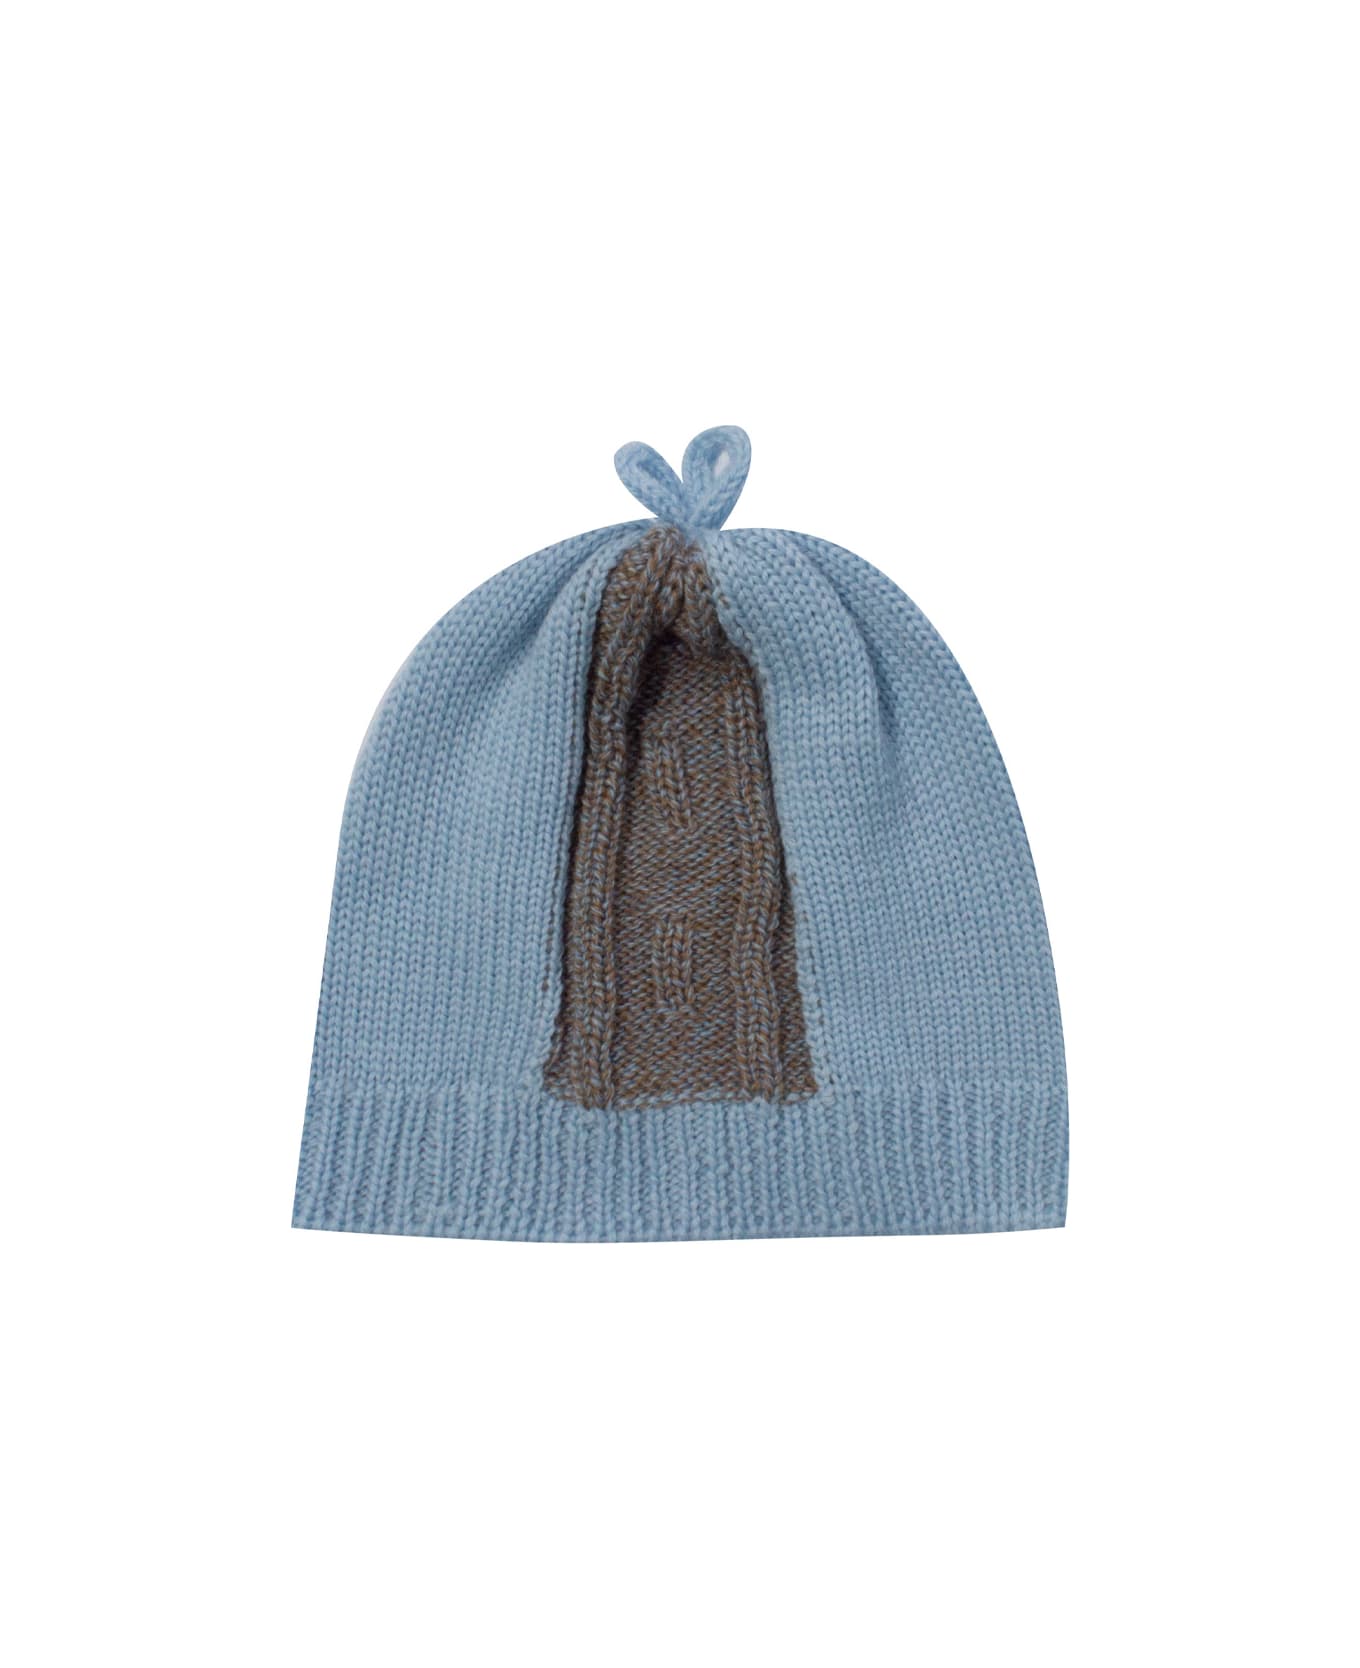 Piccola Giuggiola Wool Knit Hat - Light blue